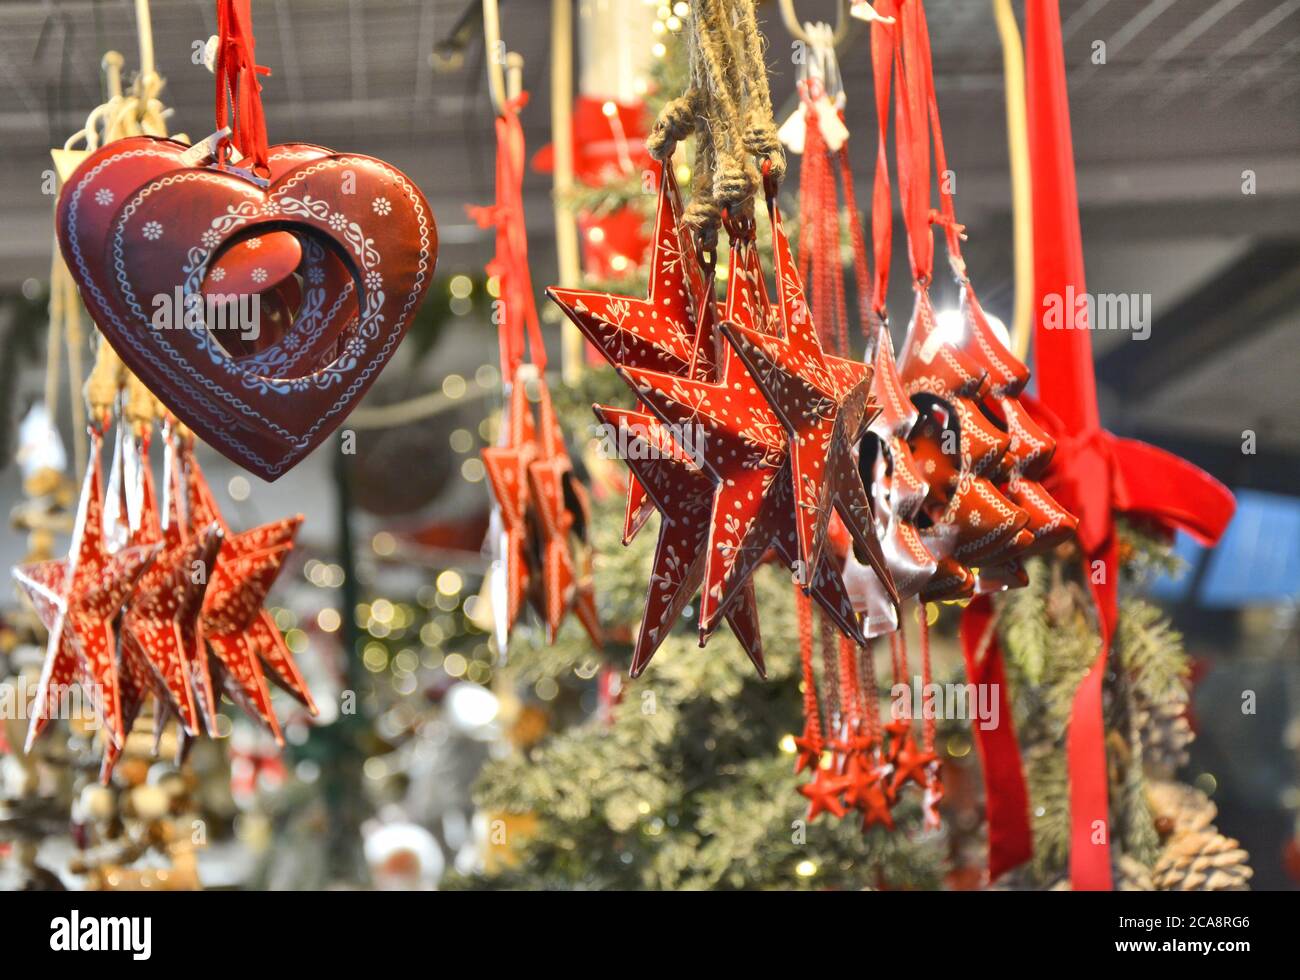 Christmas beautiful hanging ornaments on Christmas market stall. Stock Photo